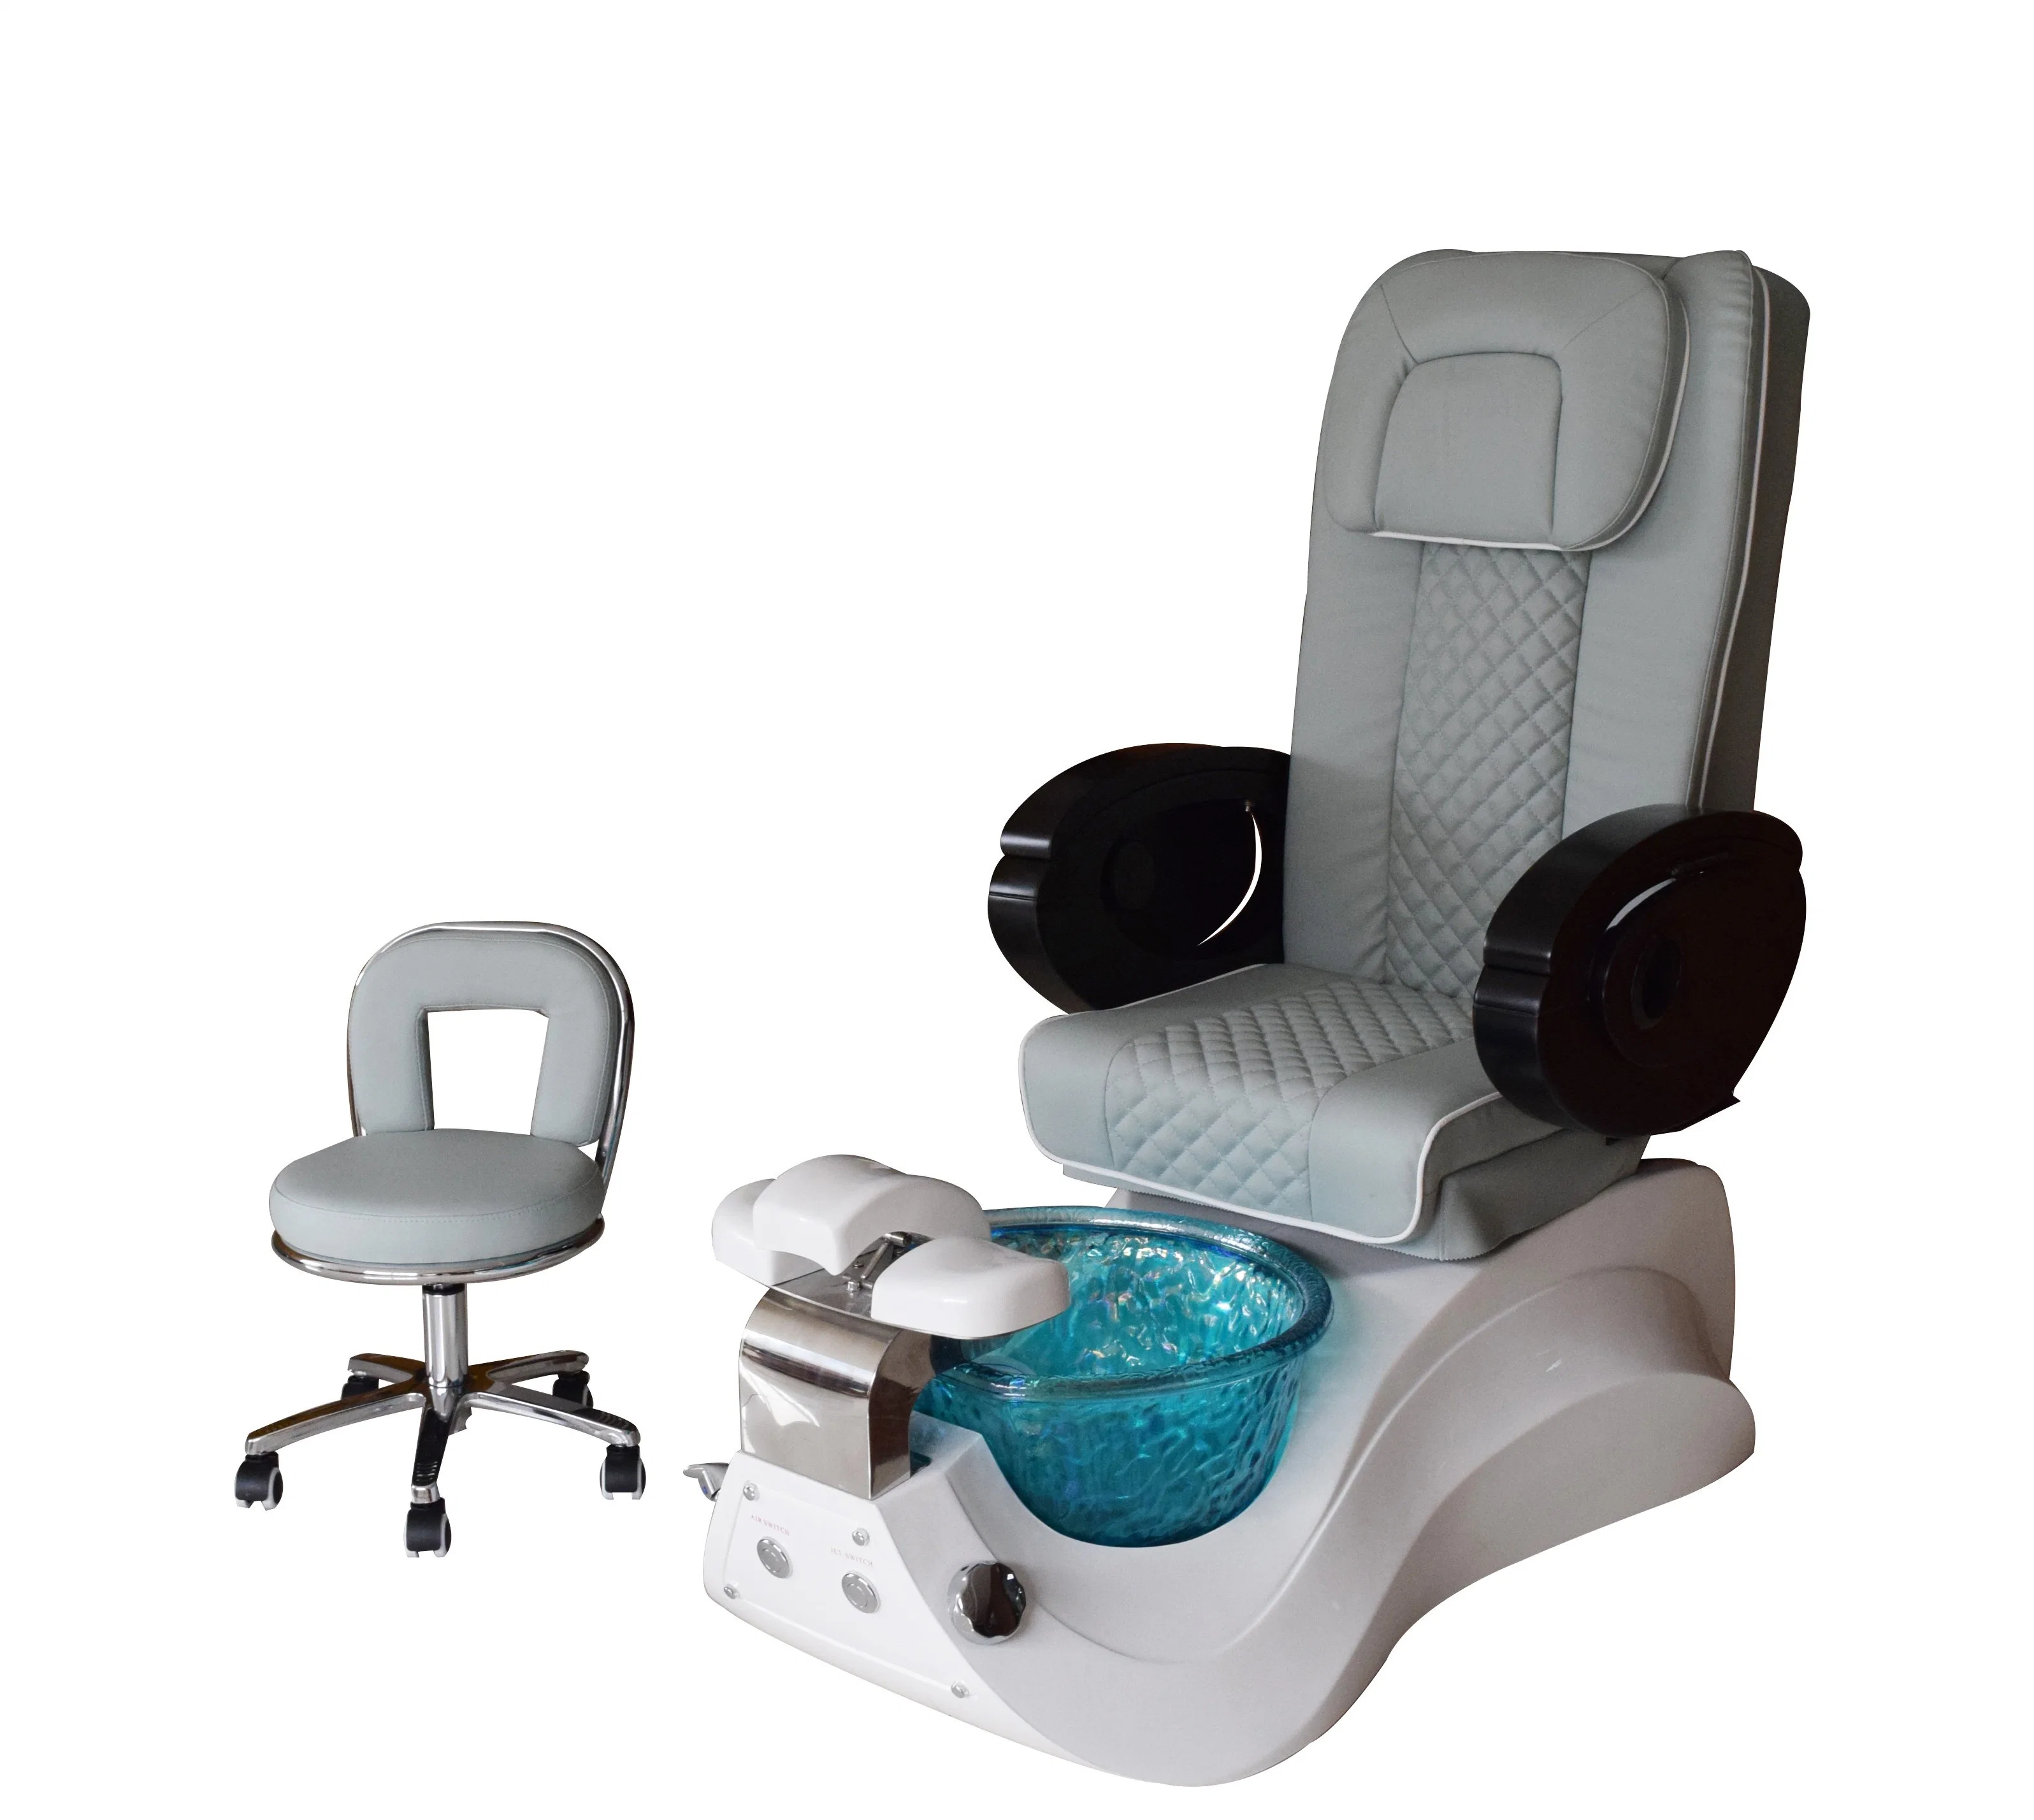 Zluxury Nail Salon Pedicure Chair Foot SPA Massage Chair